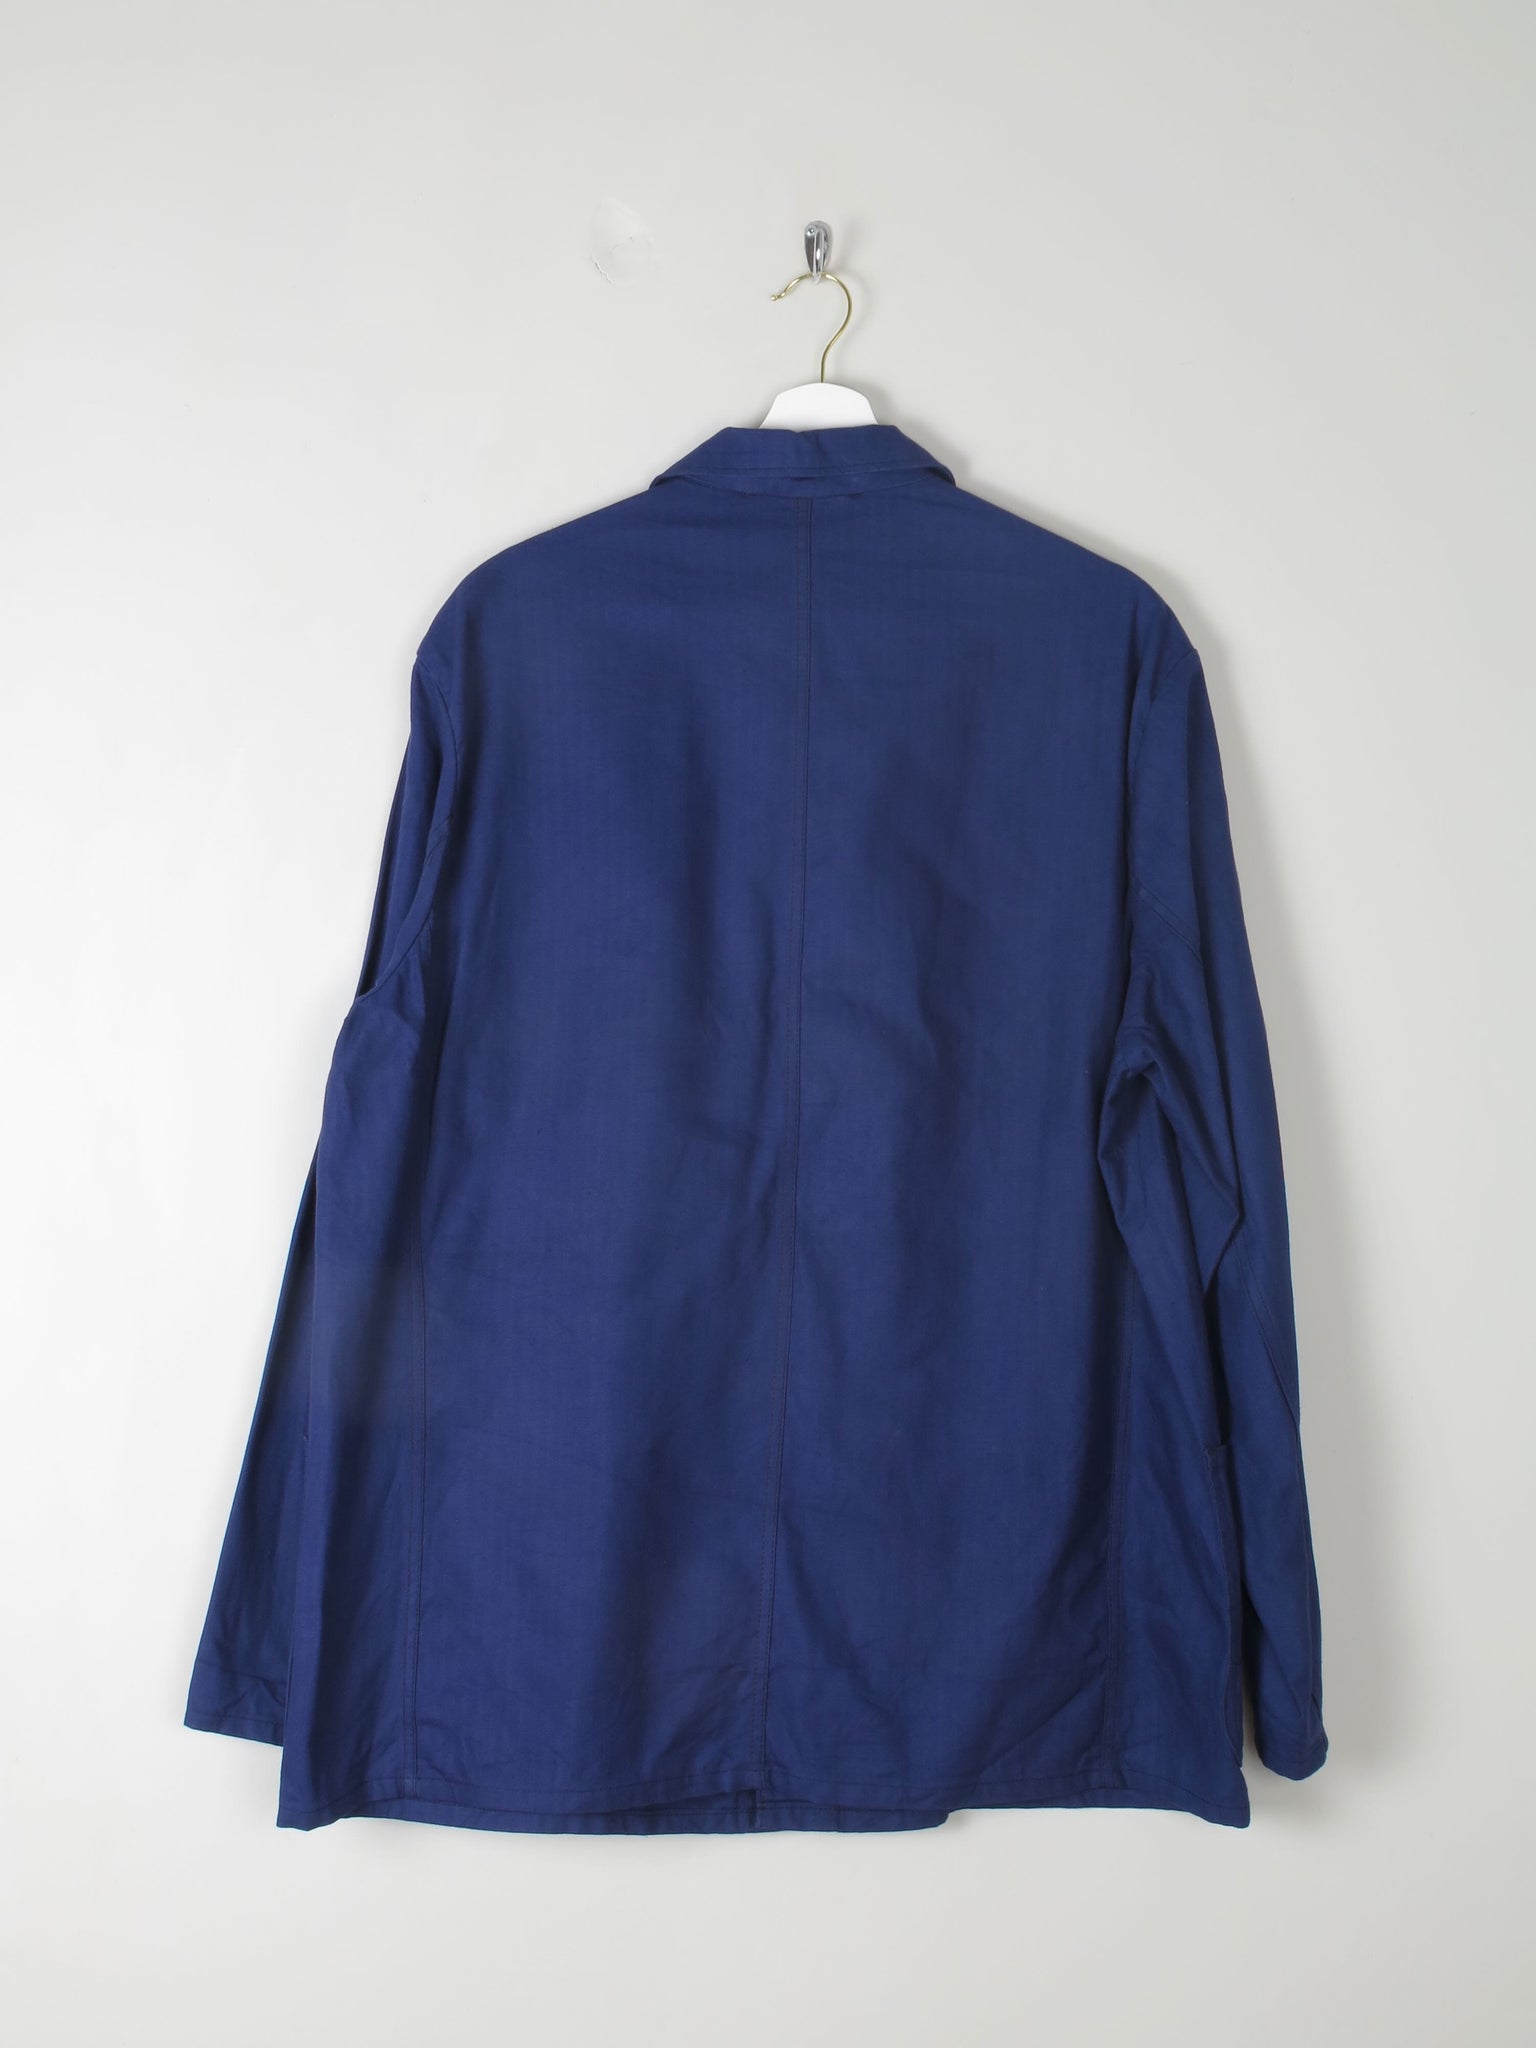 Men's Vintage Indigo Blue Work Jacket L/XL